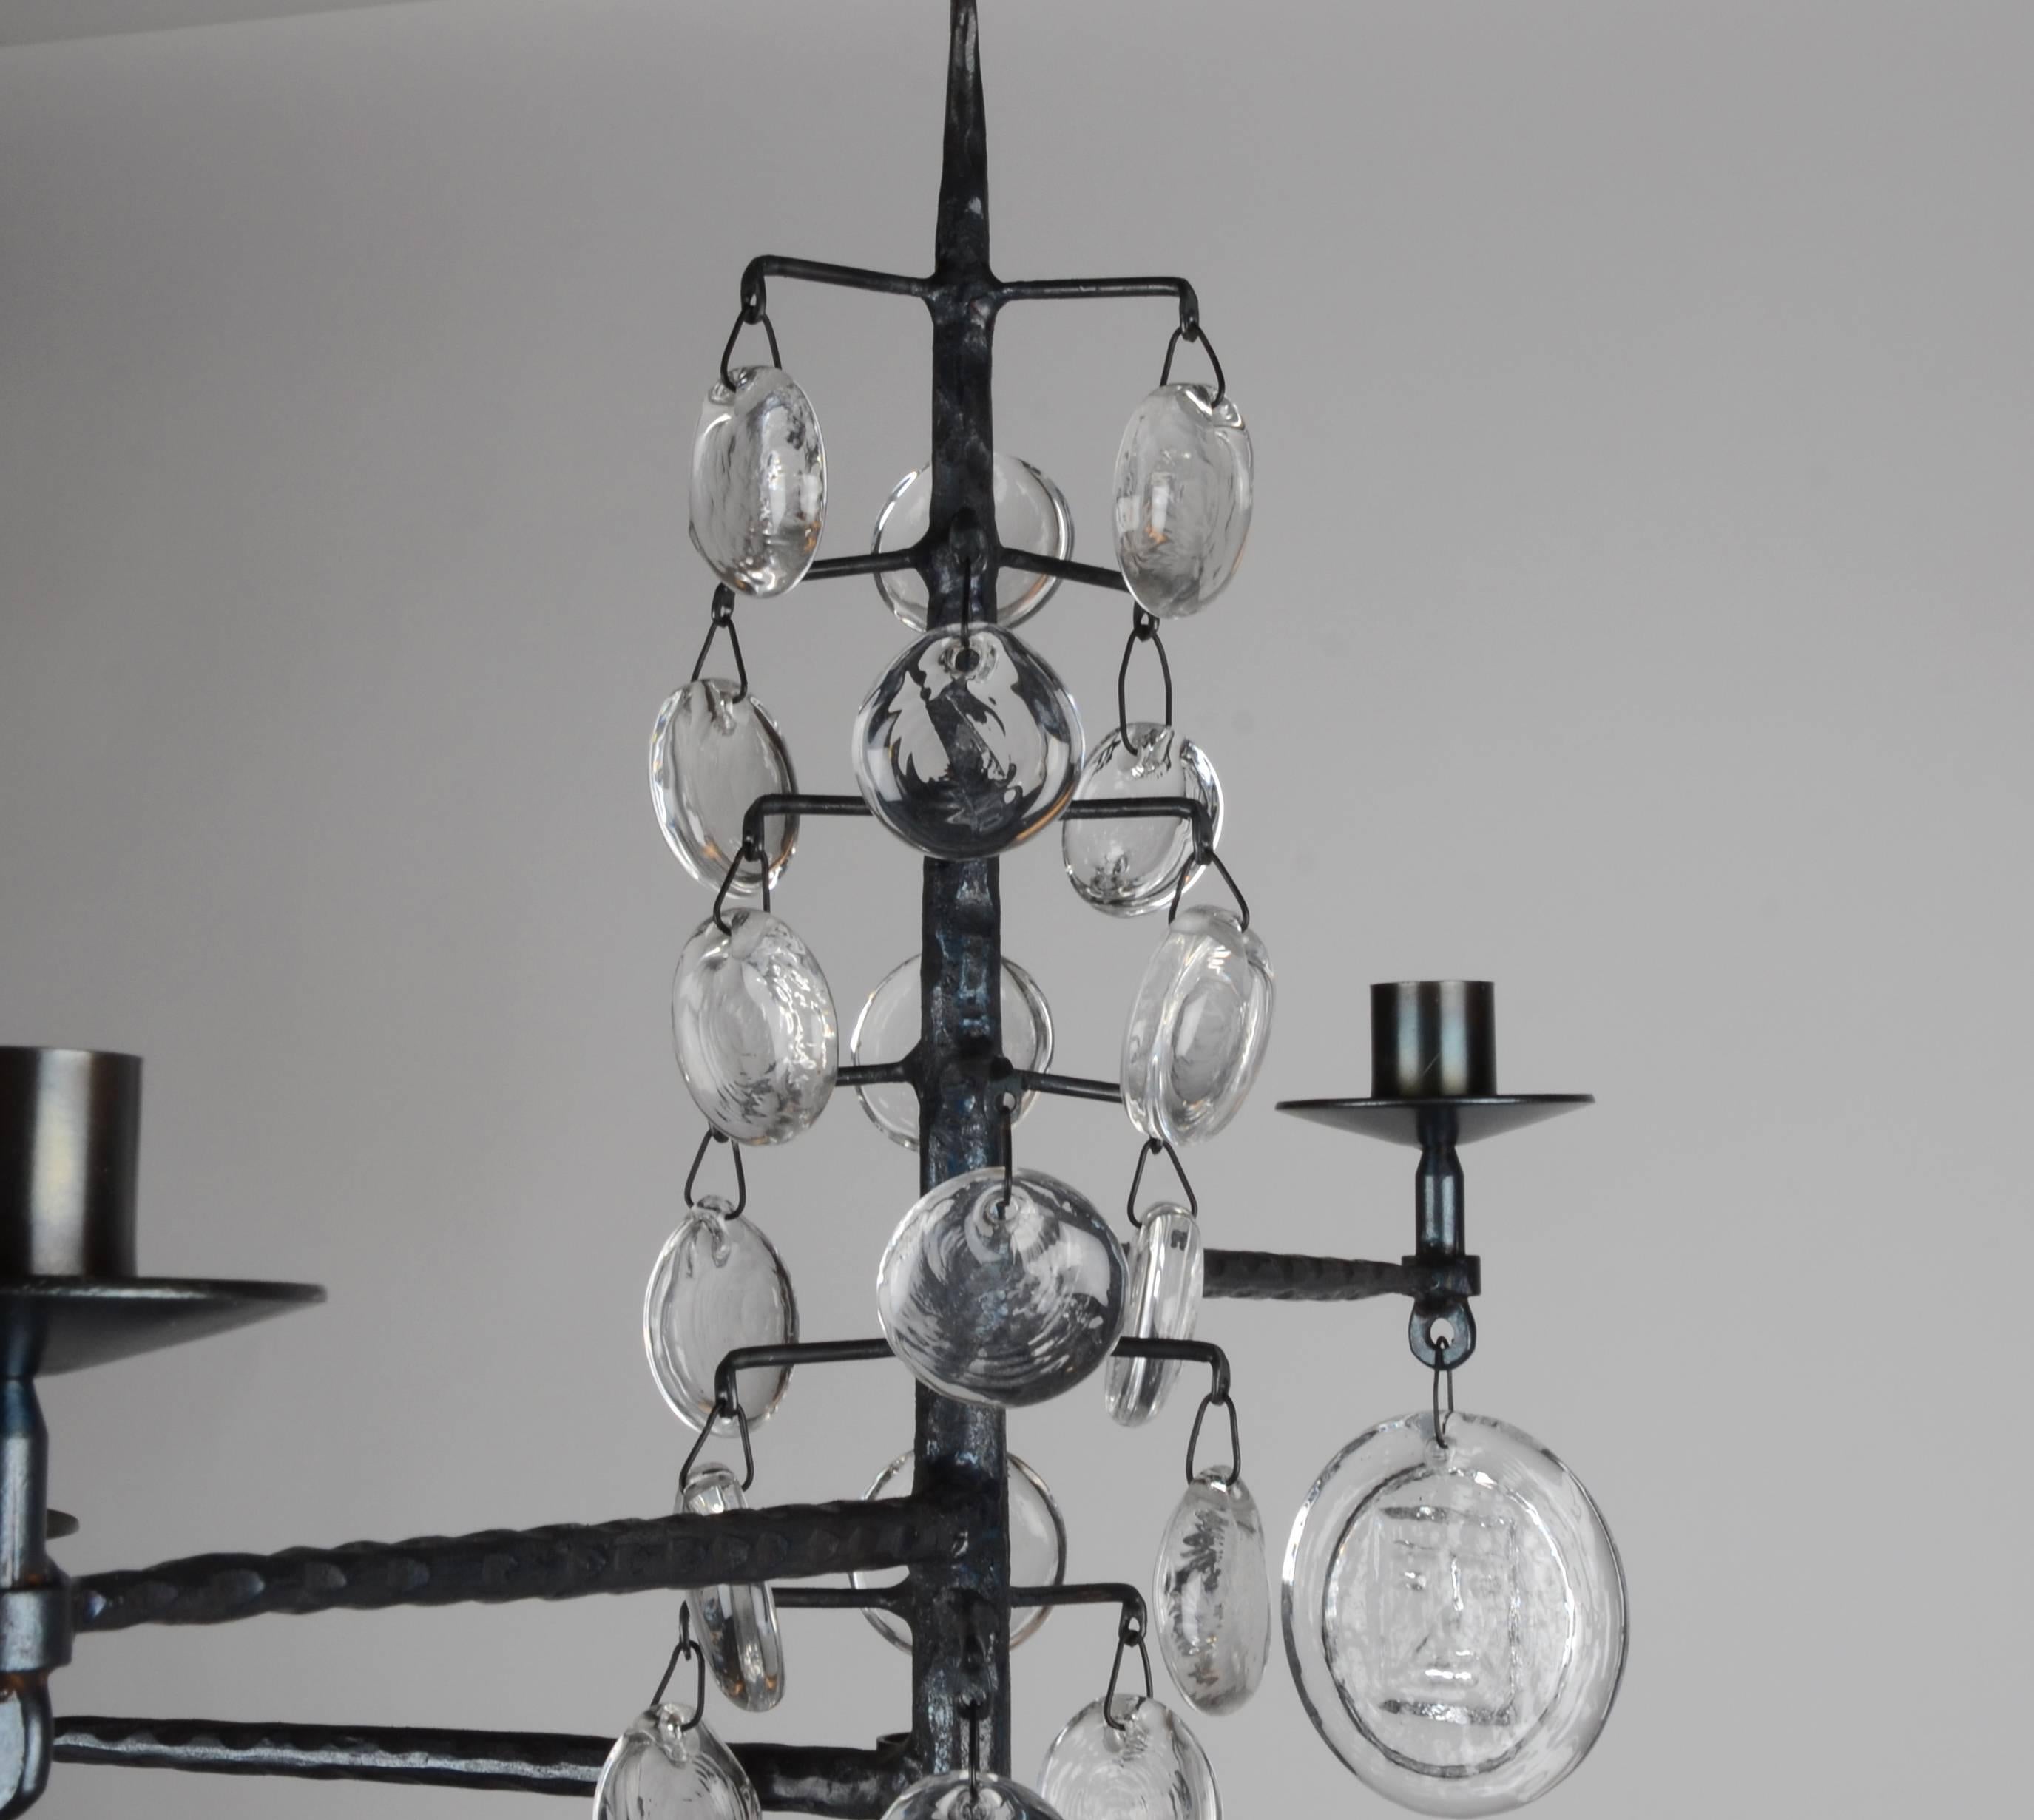 Twelve-armed chandelier in glass and cast-iron. Designed by Erik Höglund for Boda Smide.